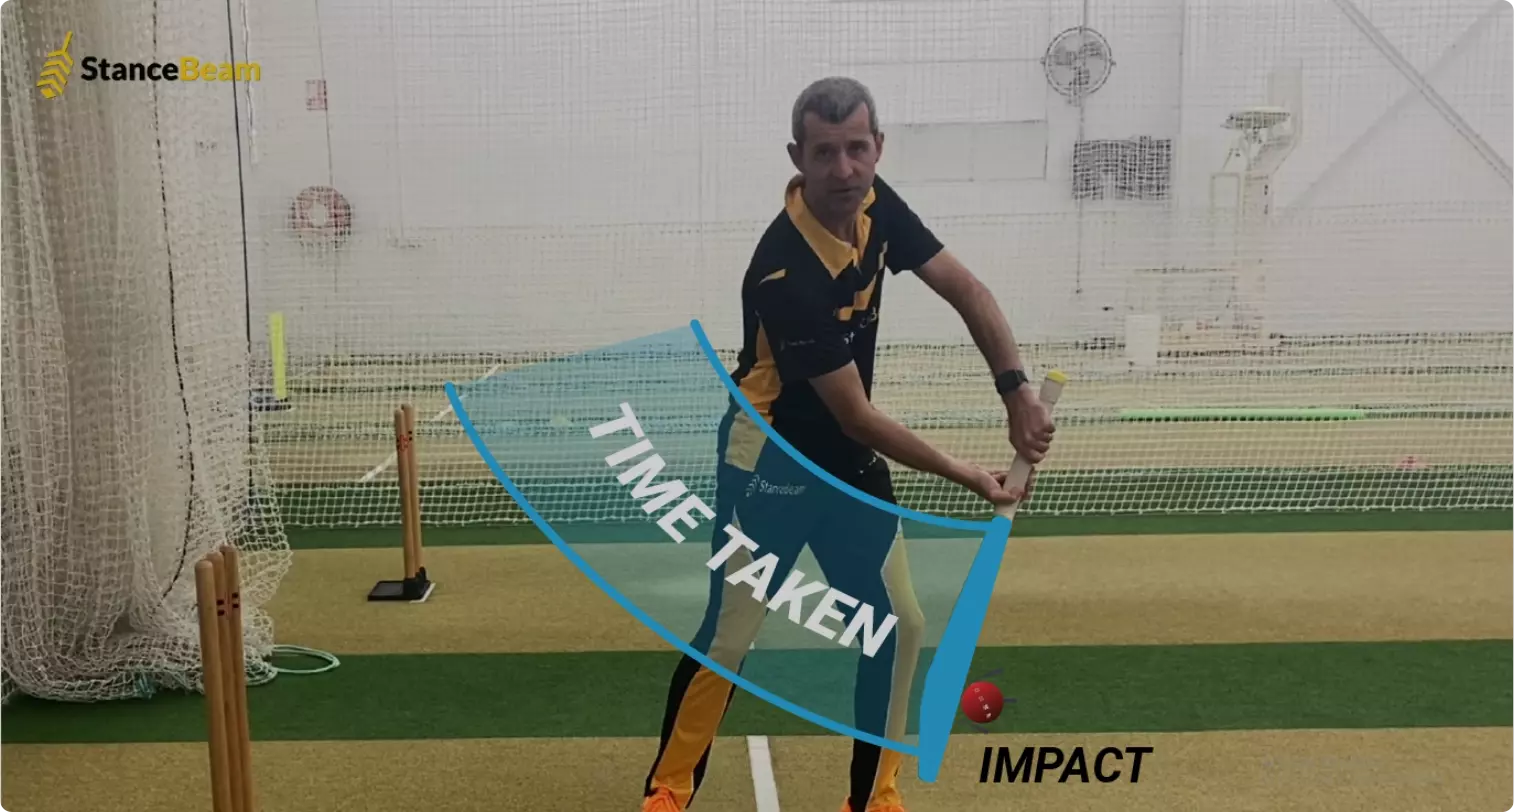 Measuring The Time Taken To Impact in StanceBeam Cricket Coaching App